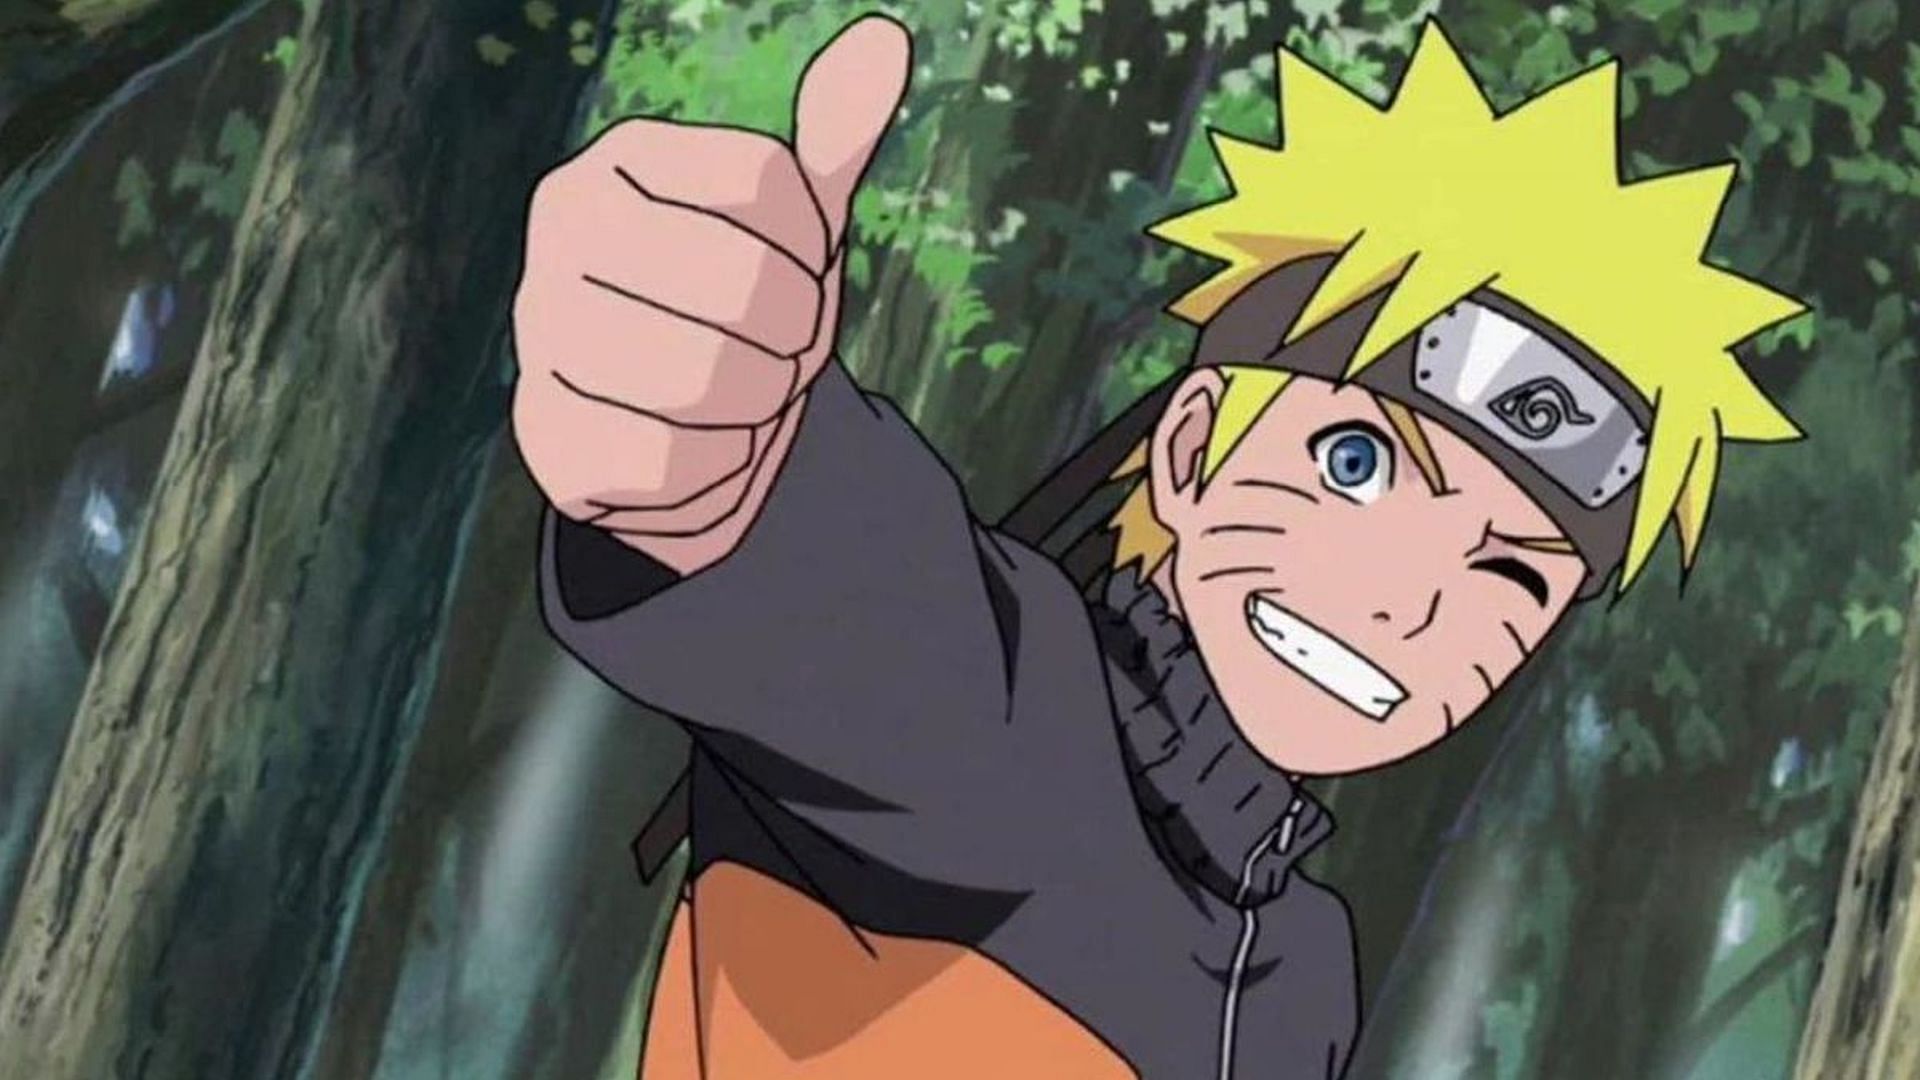 Naruto has an anime fandom that could learn to be more accepting, like the main character (Image via Masashi Kishimoto/Shueisha, Viz Media, Naruto Shippuden)